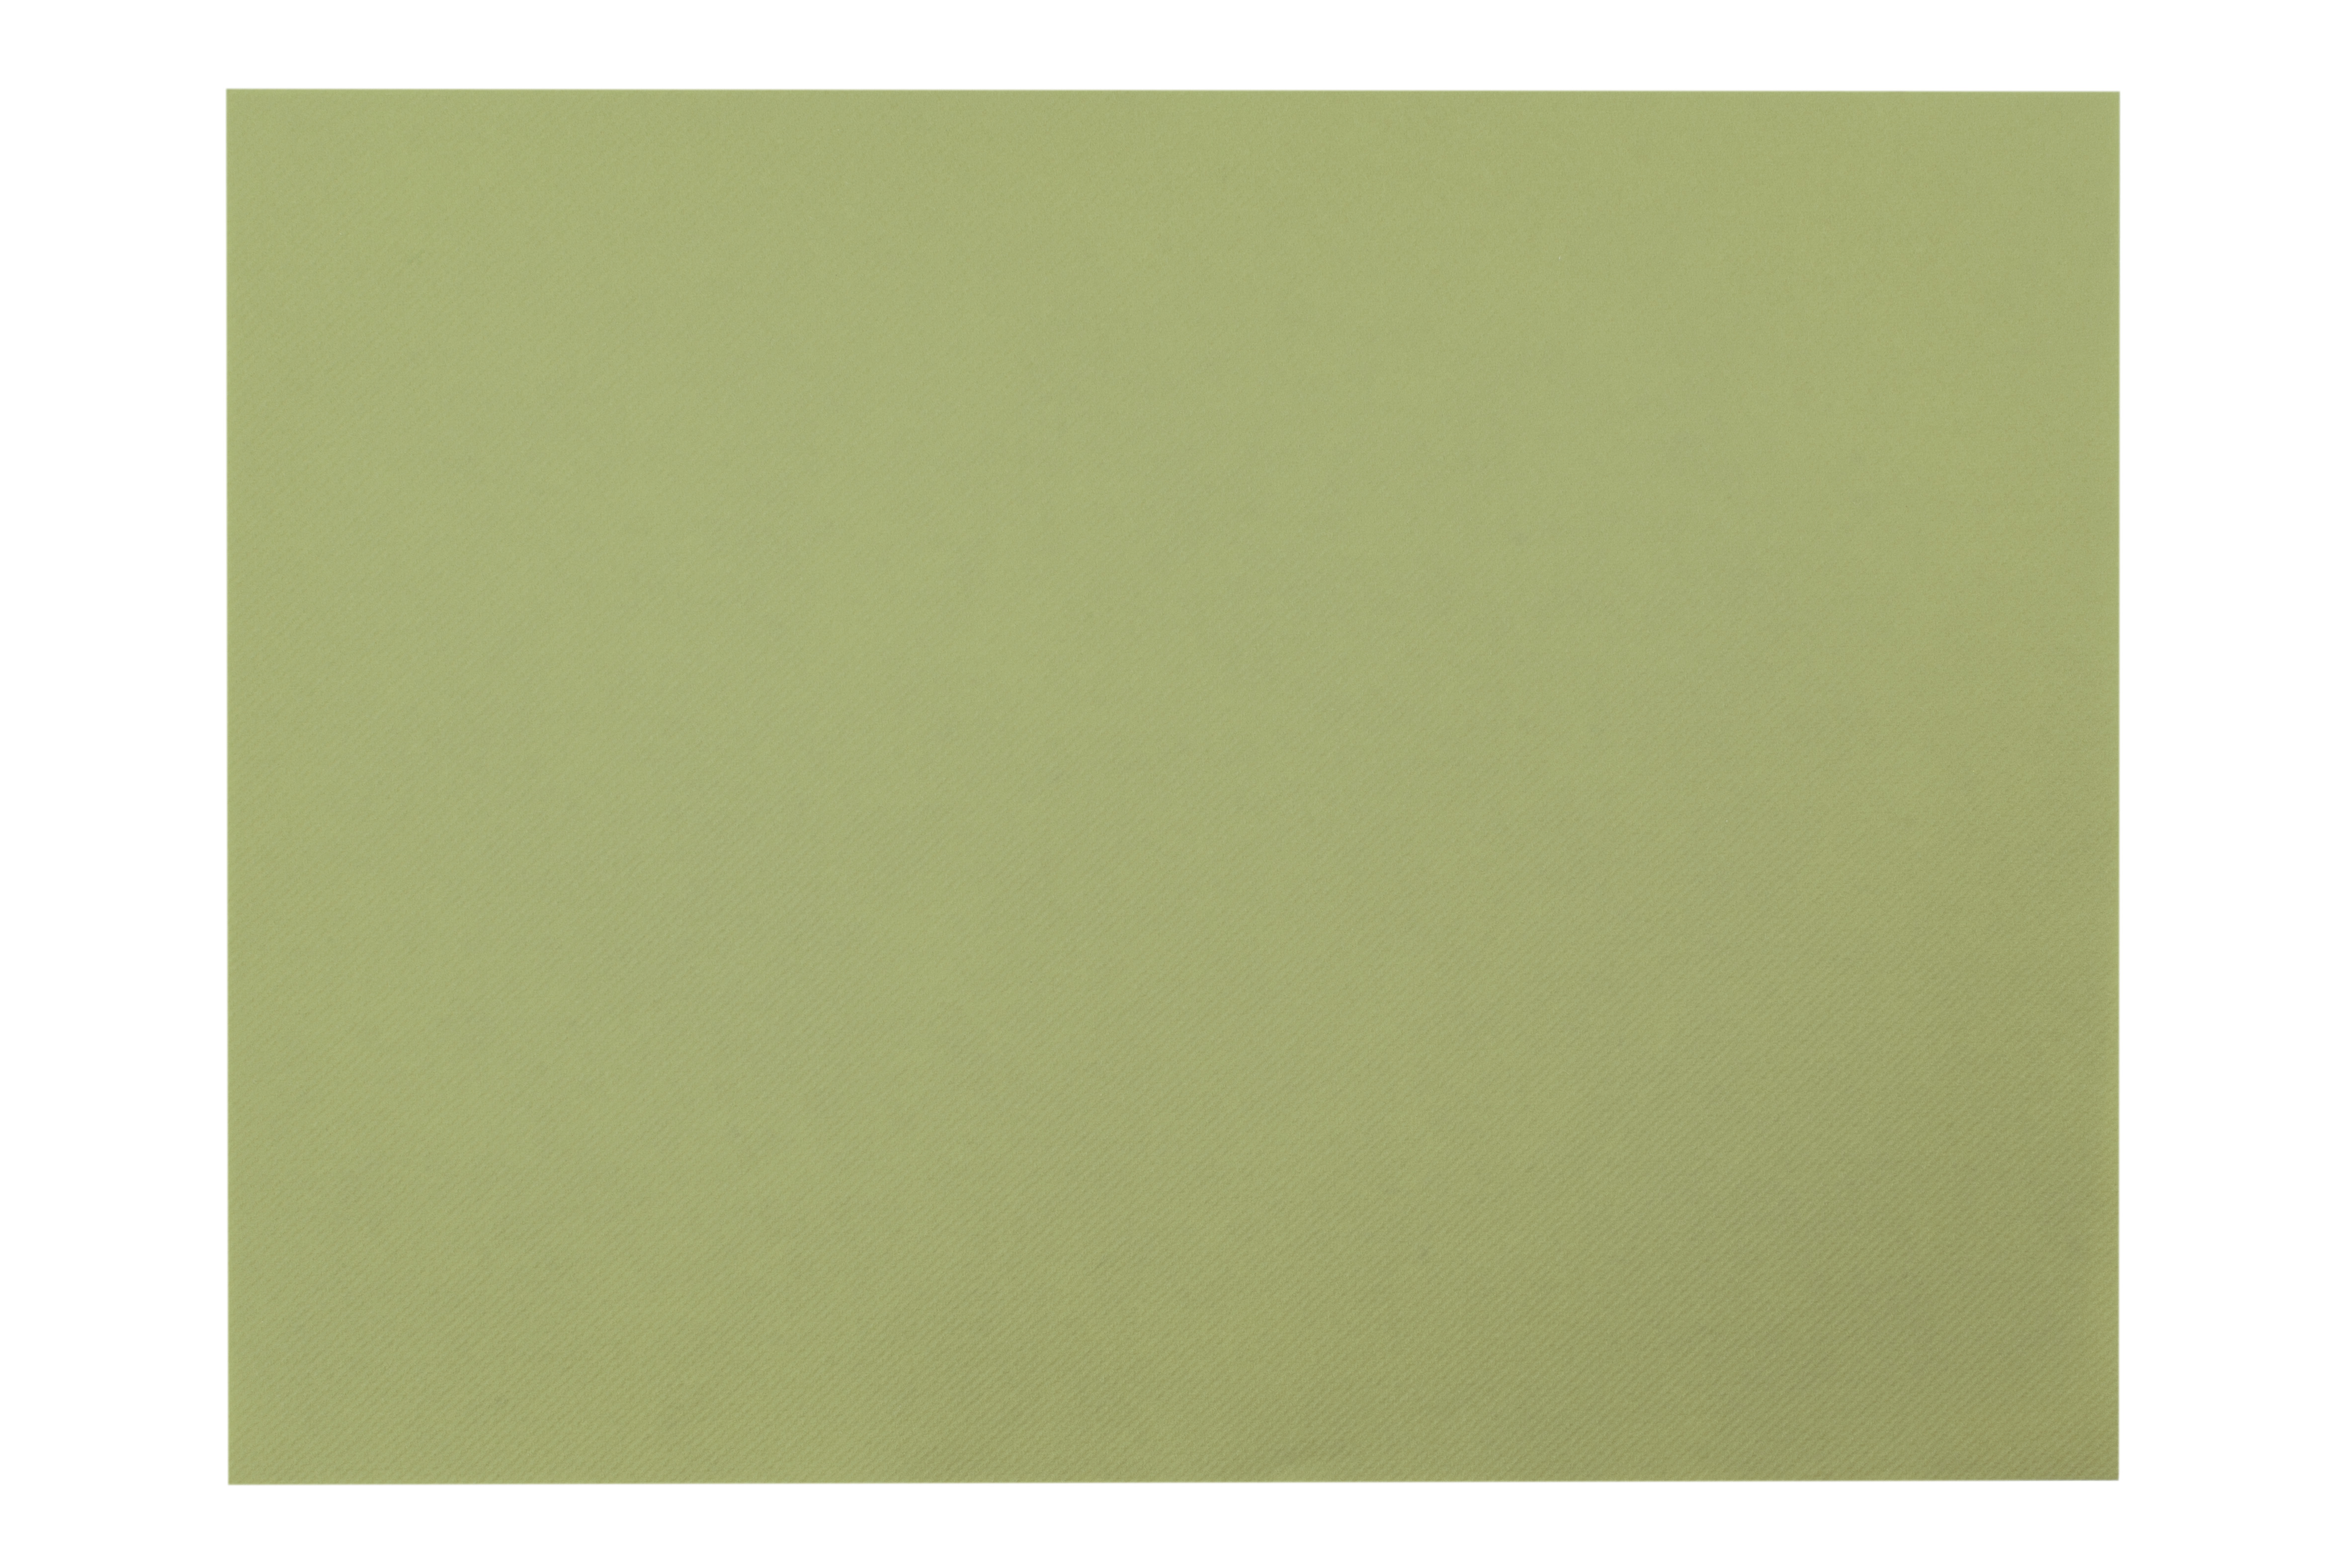 Mank Tischsets Linclass 40 x 30 cm, Basic oliv